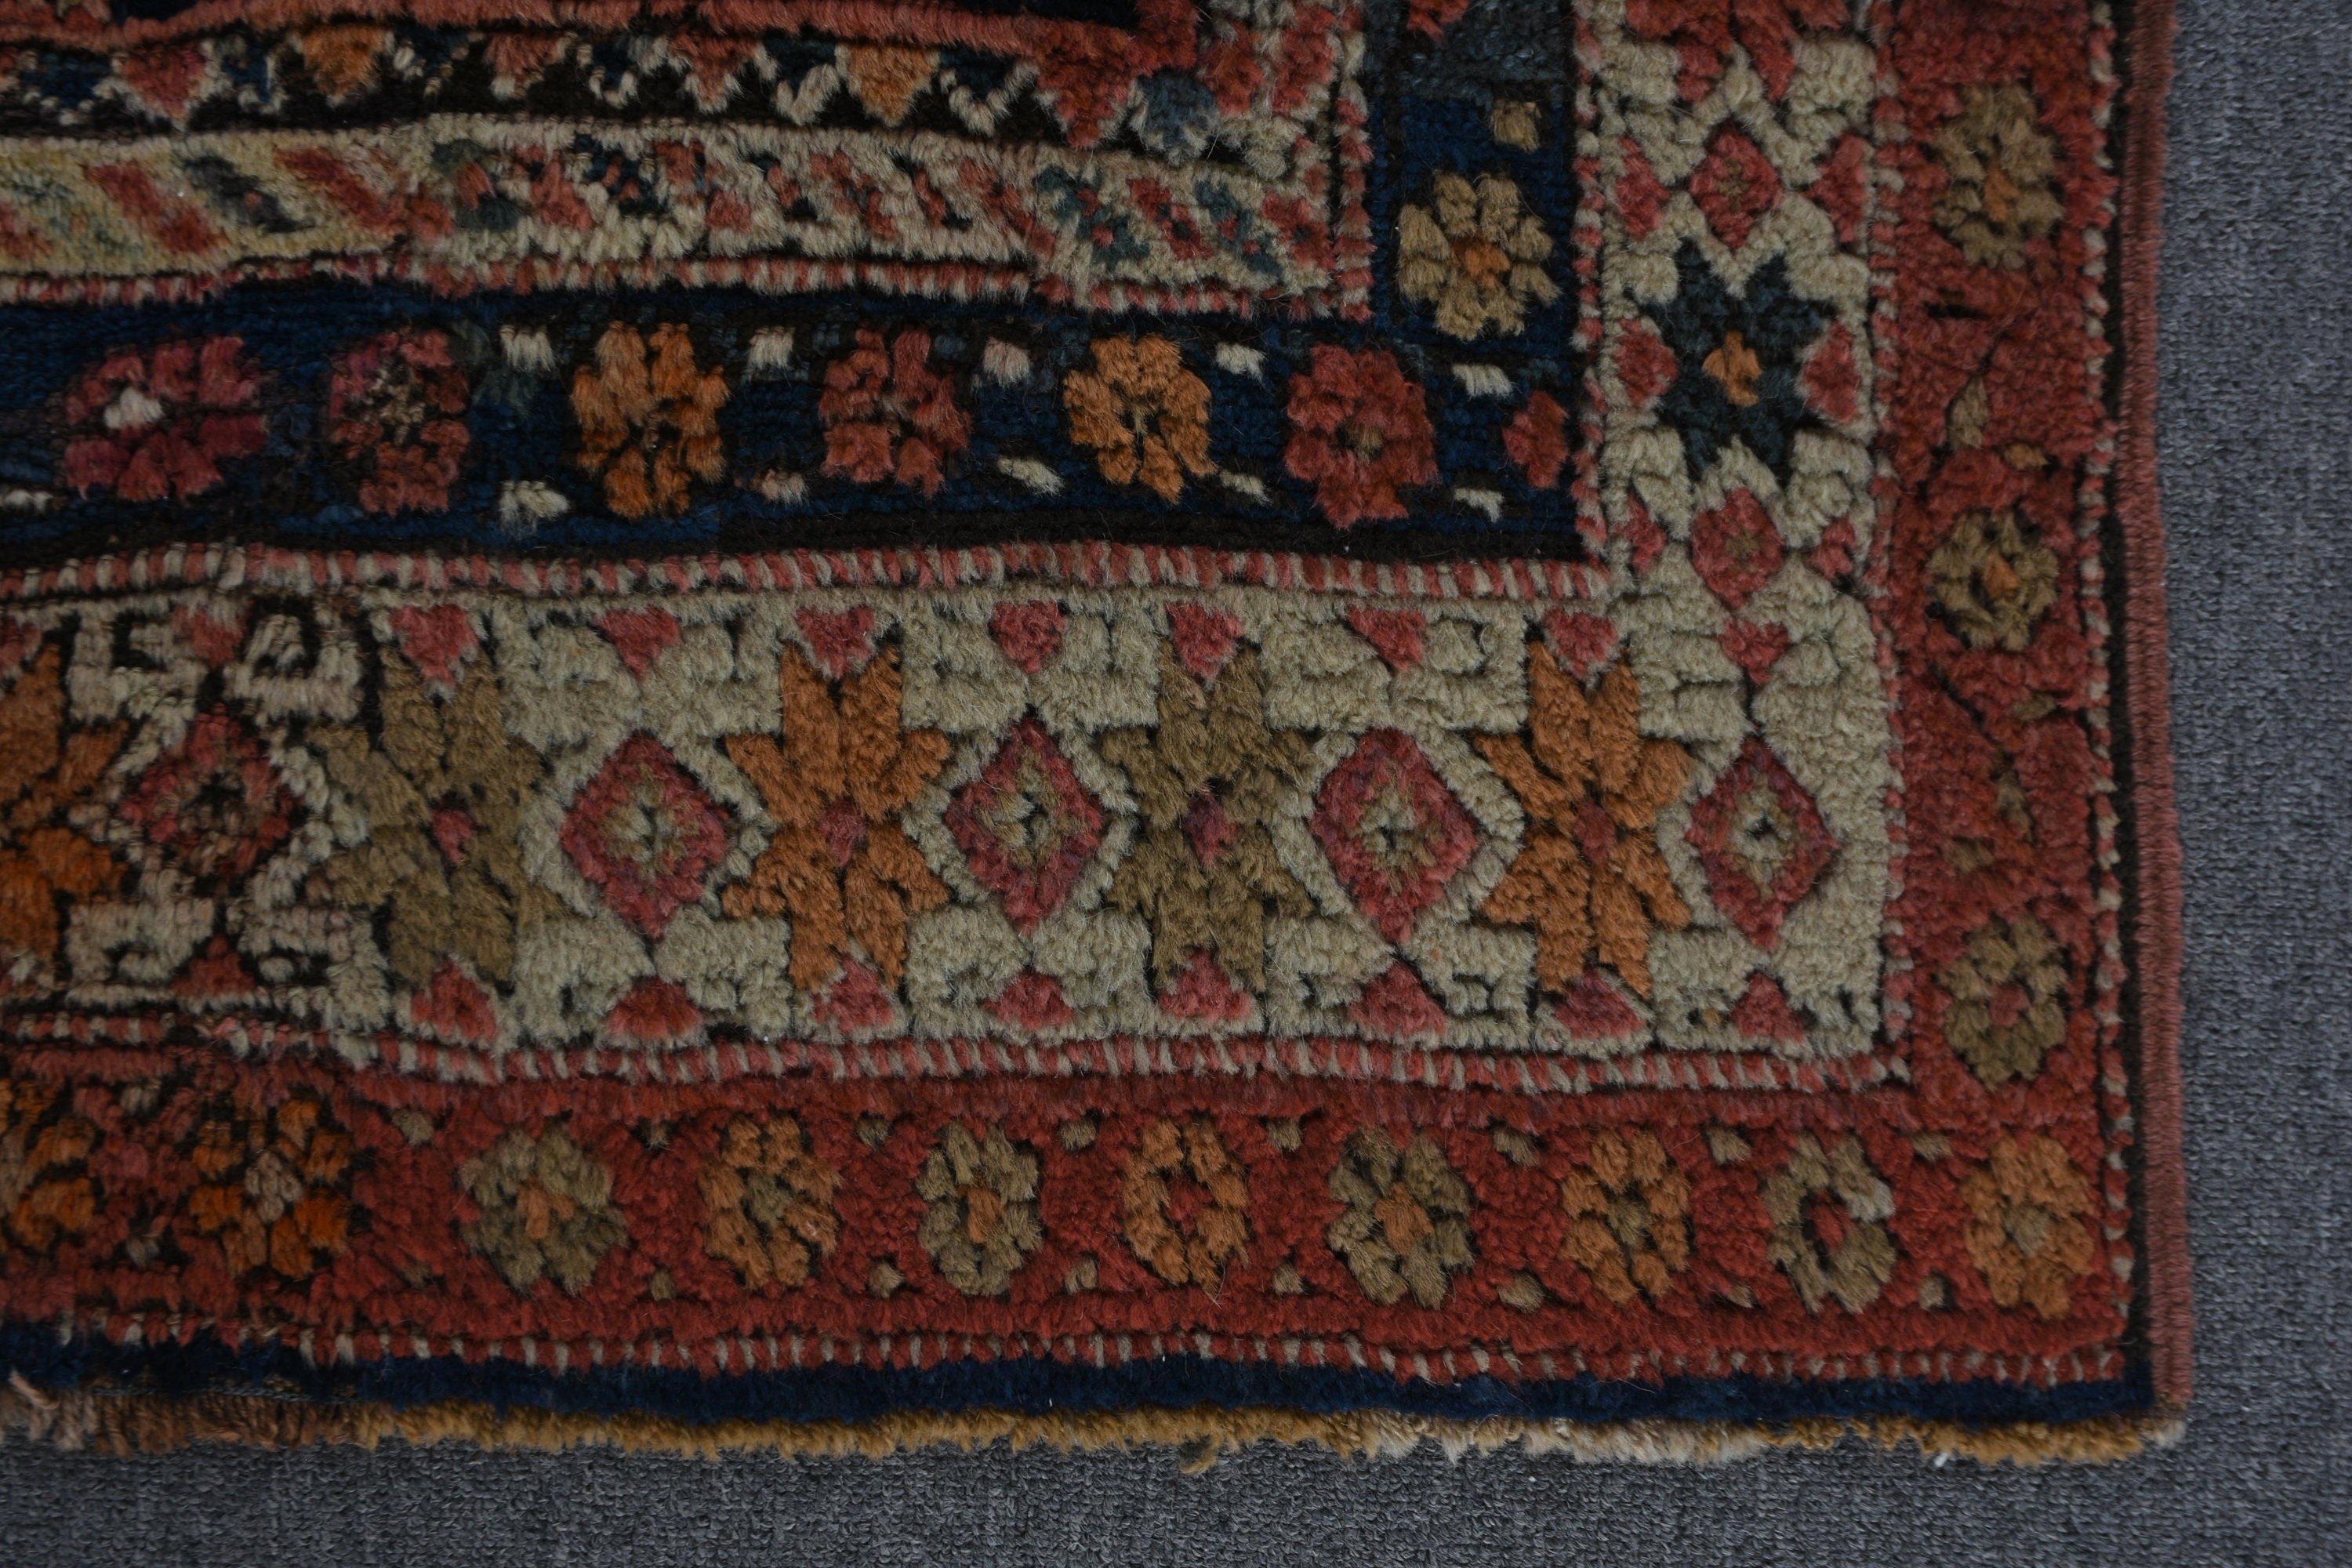 Hallway Rug, Vintage Rug, Antique Rug, Bedroom Rug, 4.2x13.4 ft Runner Rug, Turkish Rug, Kitchen Rug, Rugs for Corridor, Red Moroccan Rugs